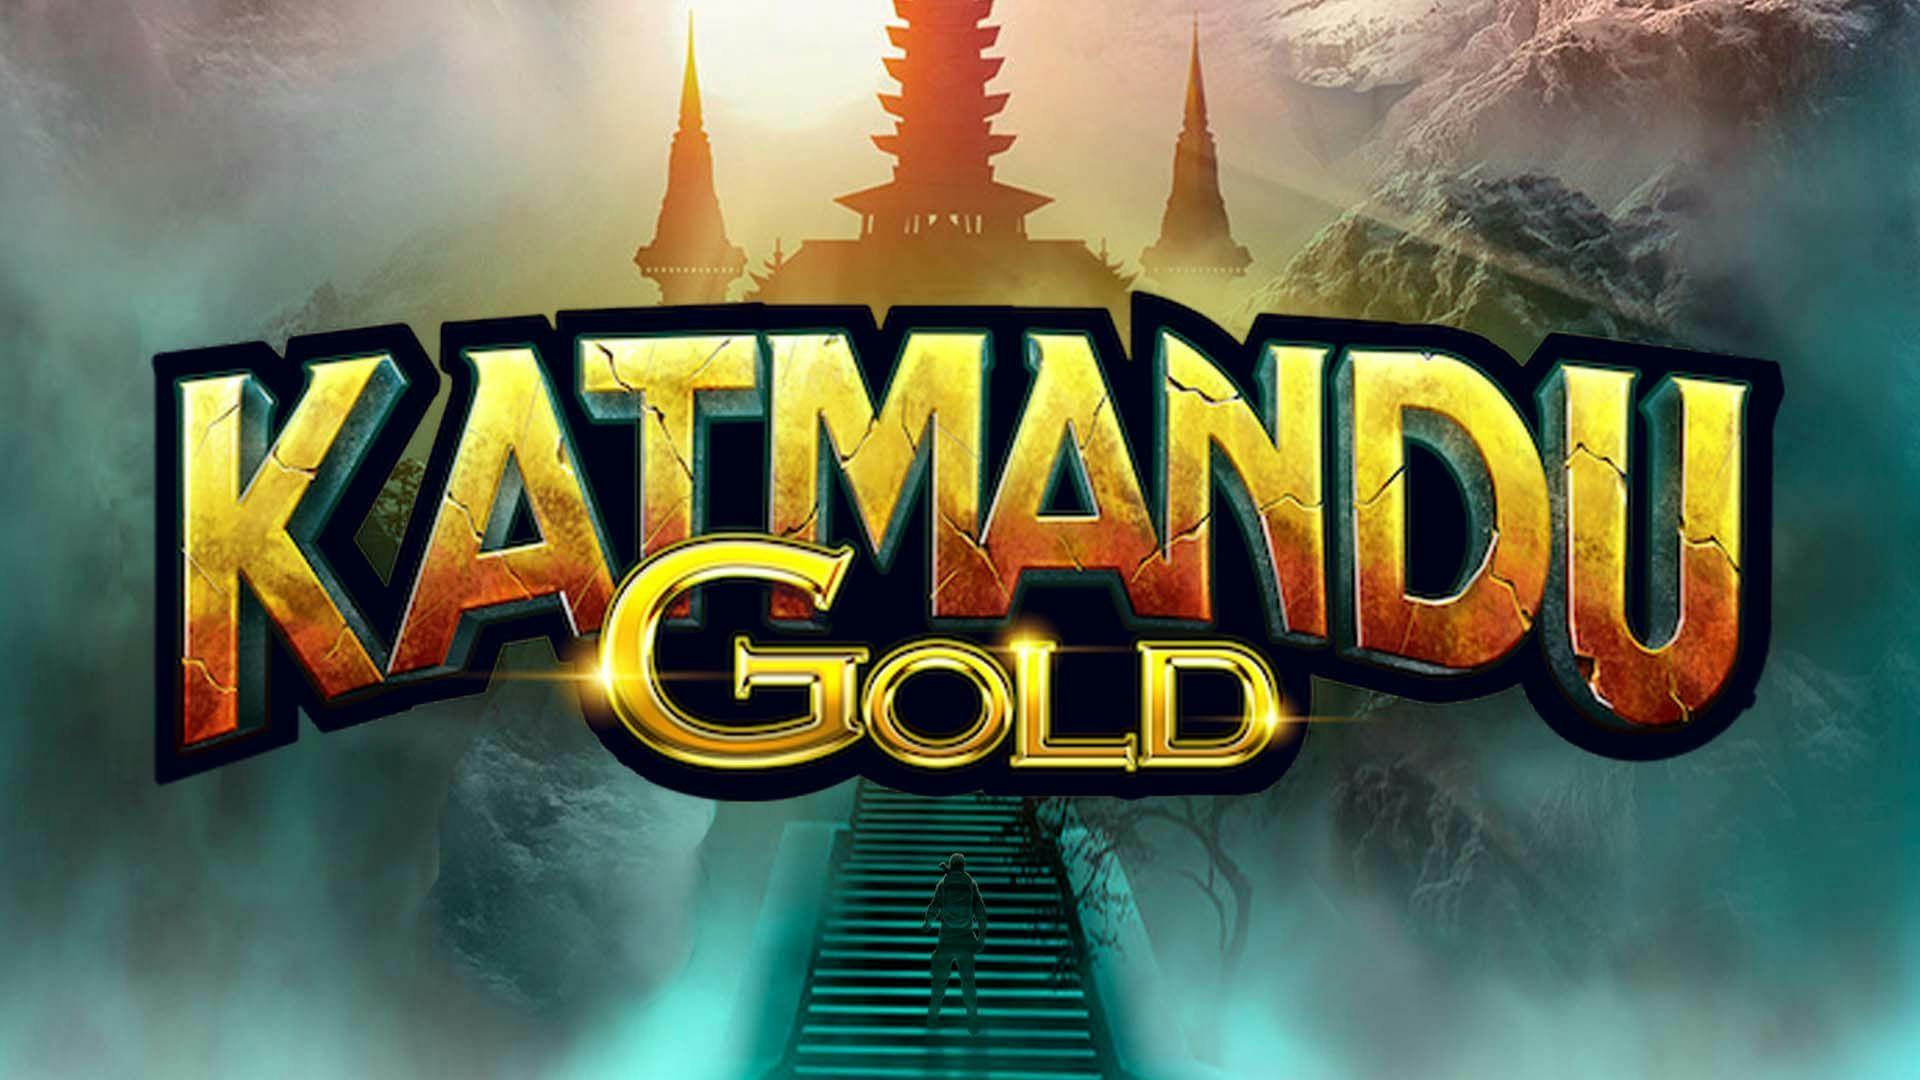 Katmandu Gold Slot Machine Online Free Play